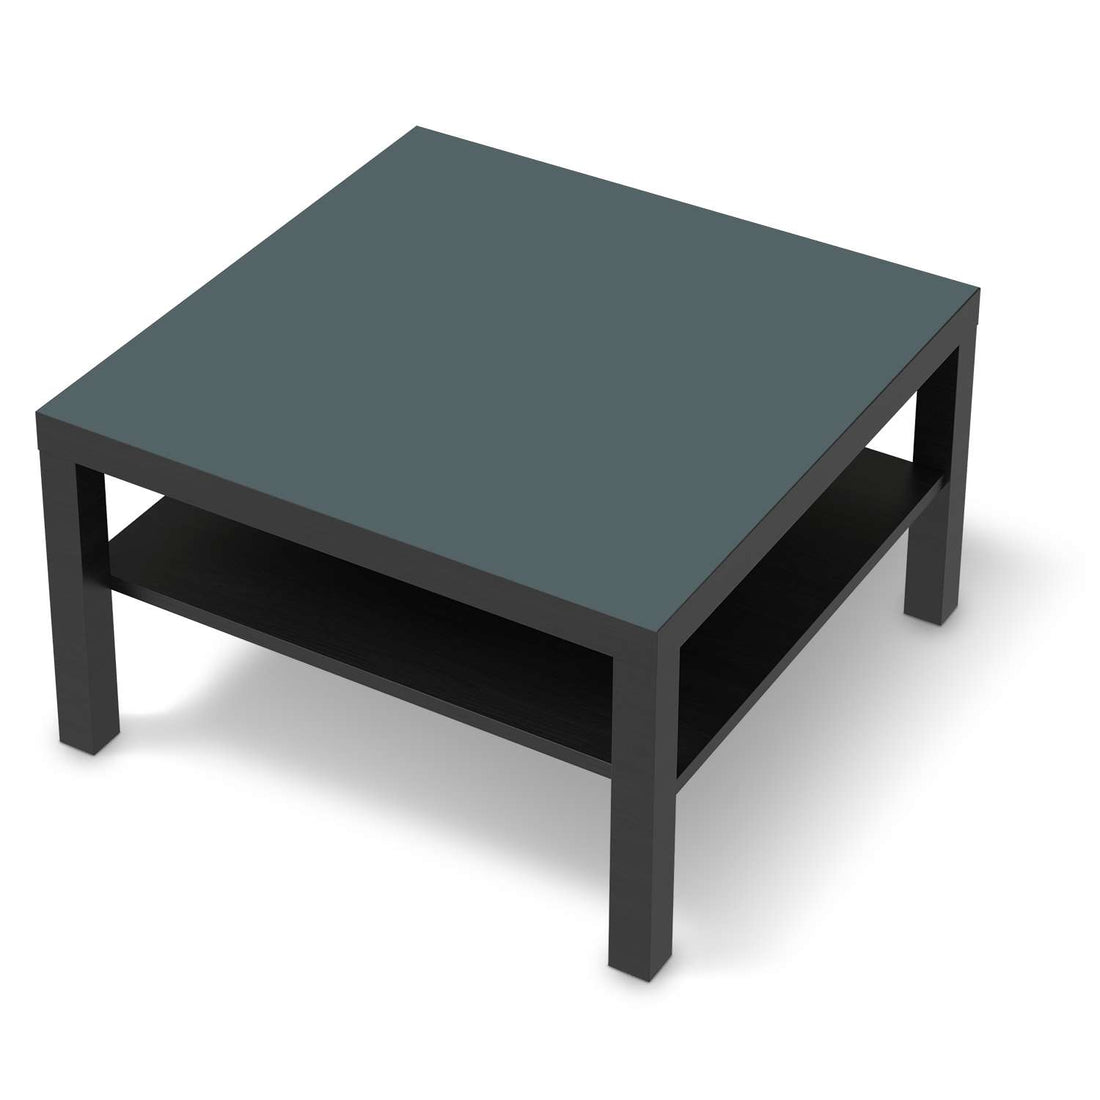 Selbstklebende Folie Blaugrau Light - IKEA Lack Tisch 78x78 cm - schwarz